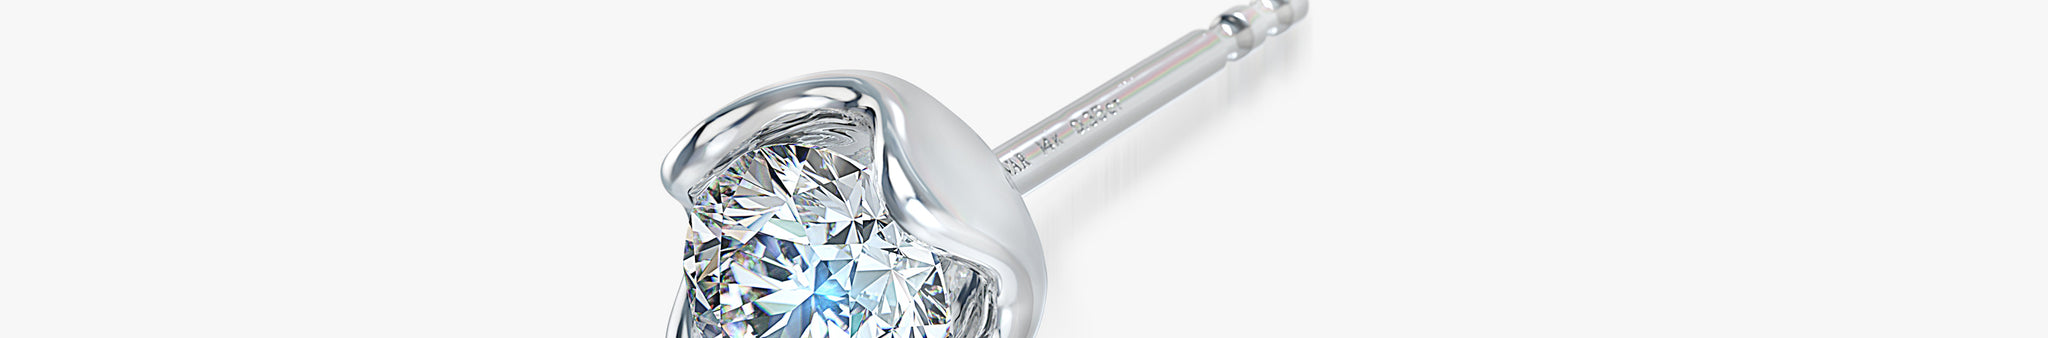 J'EVAR 14KT White Gold Lotus Petals ALTR Lab Grown Diamond Earrings Perspective View